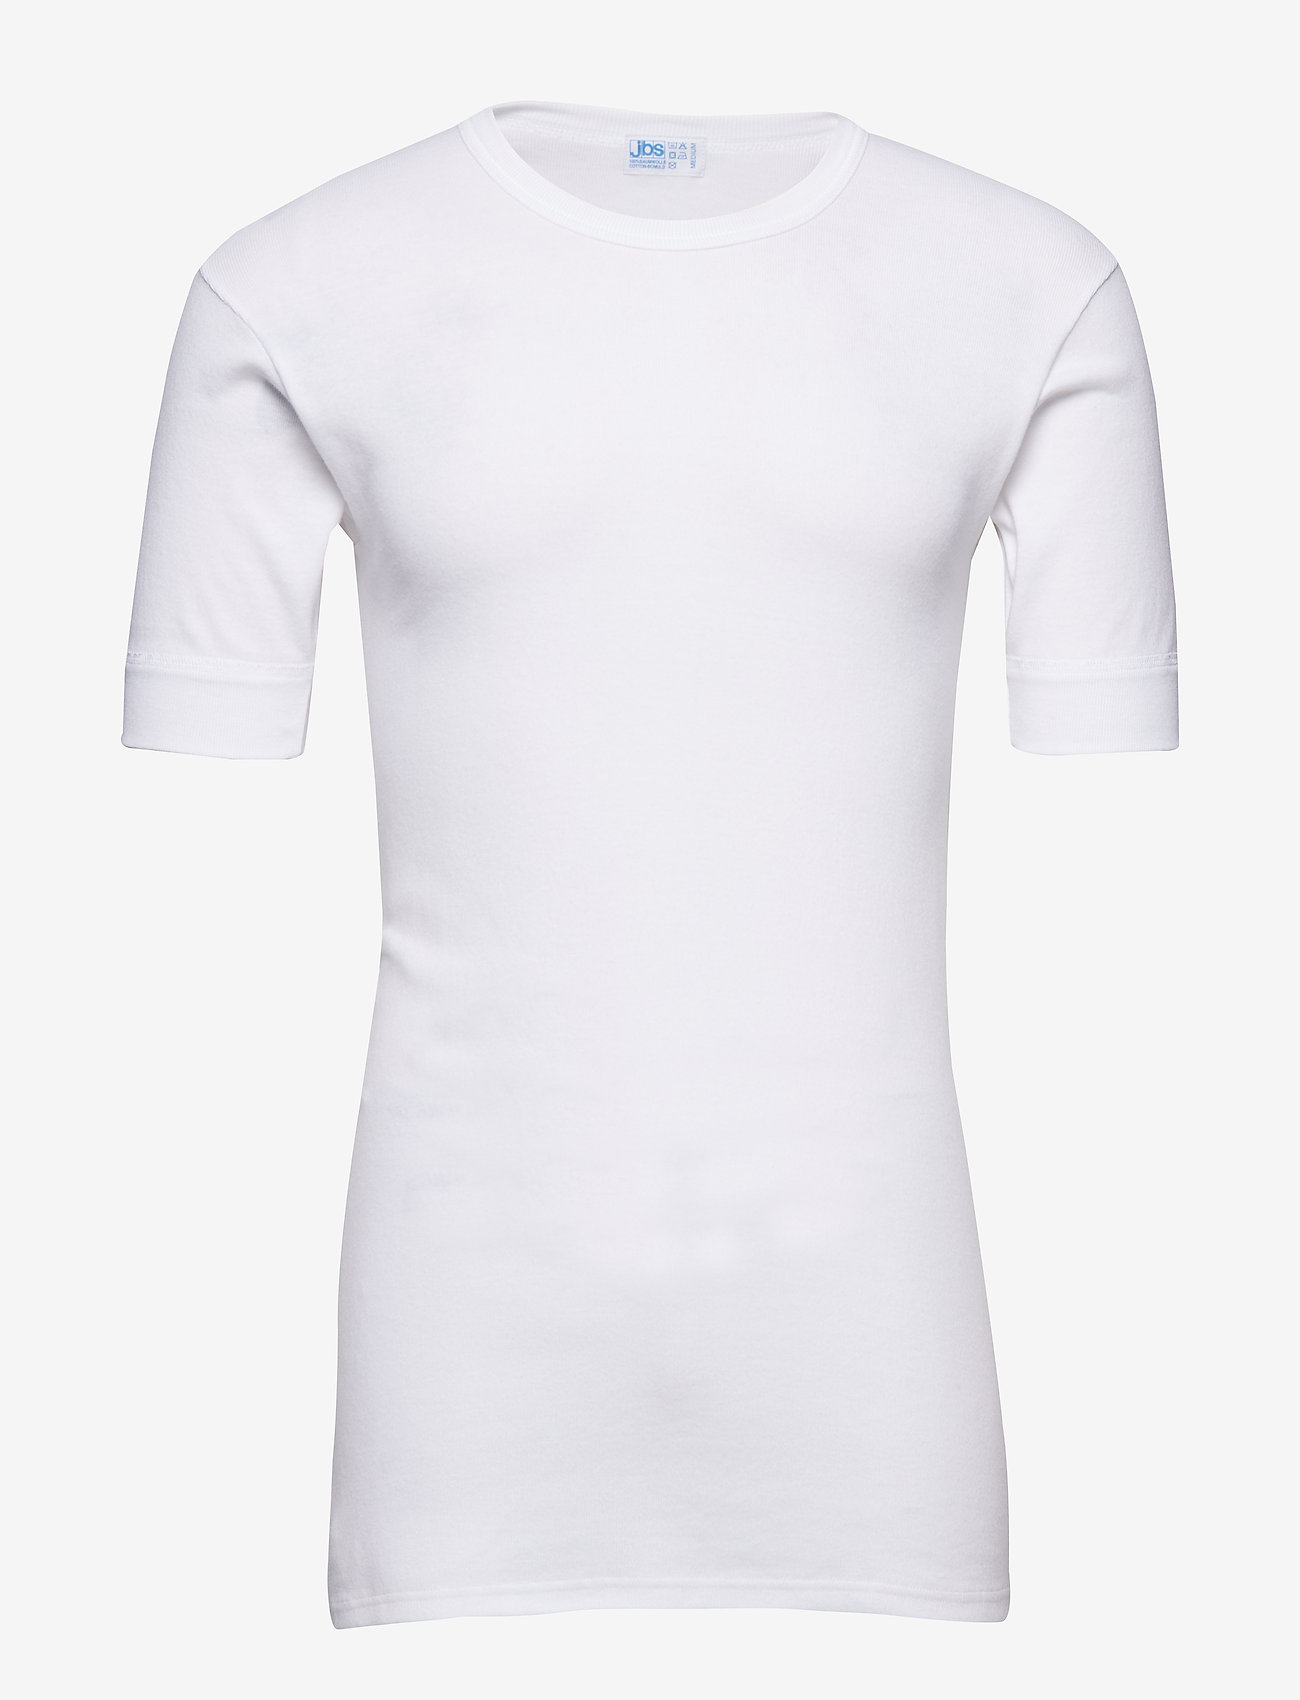 JBS - Original tee - t-shirts - white - 0